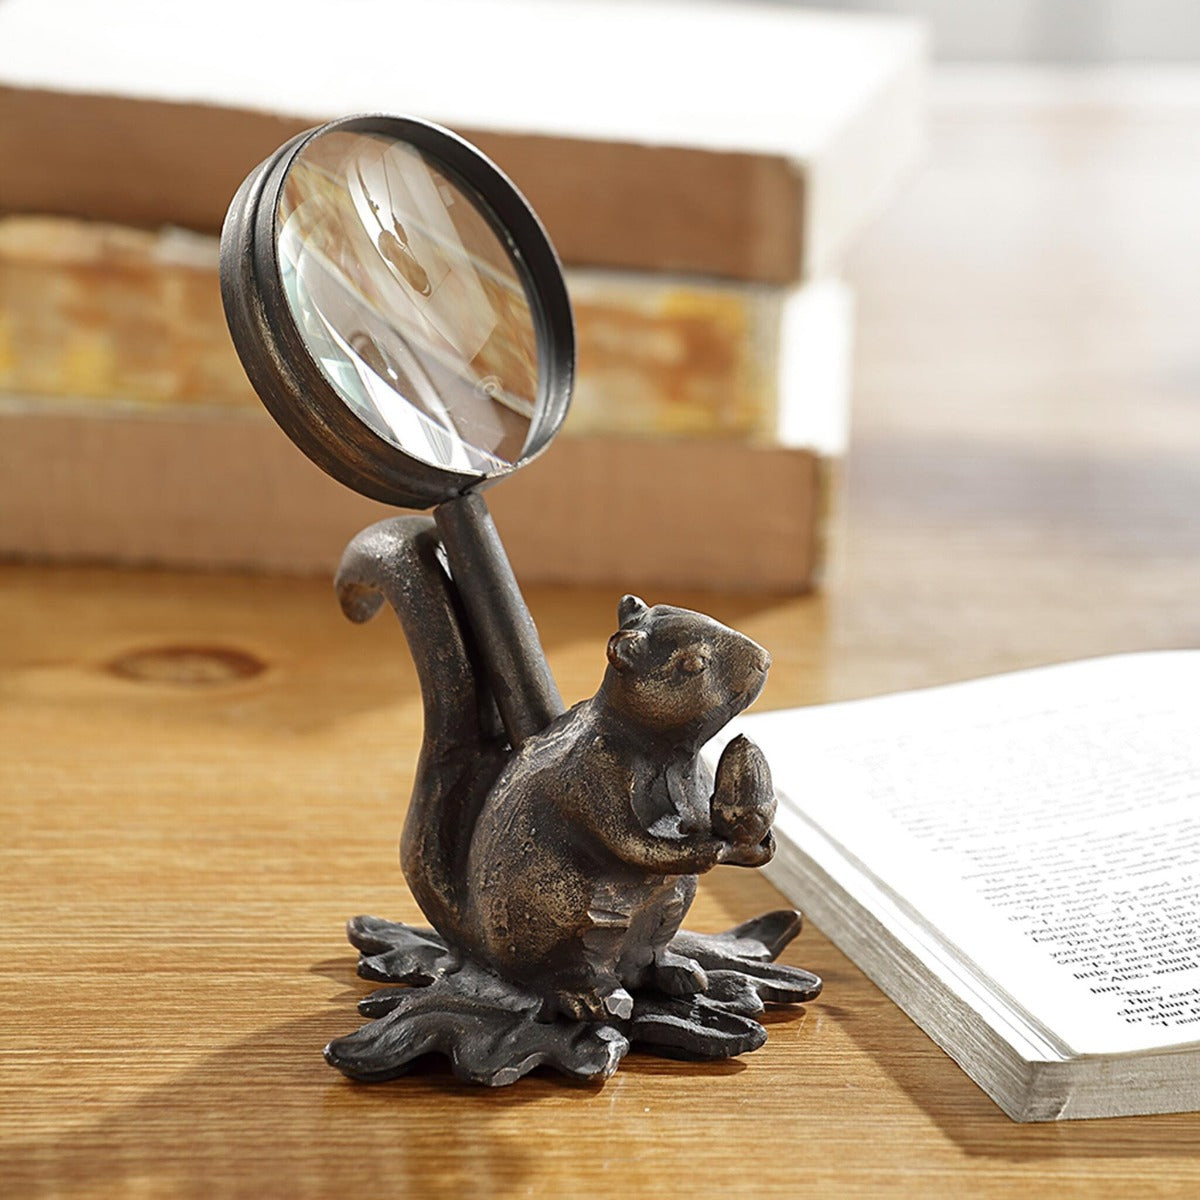 Squirrel Magnifier Glass